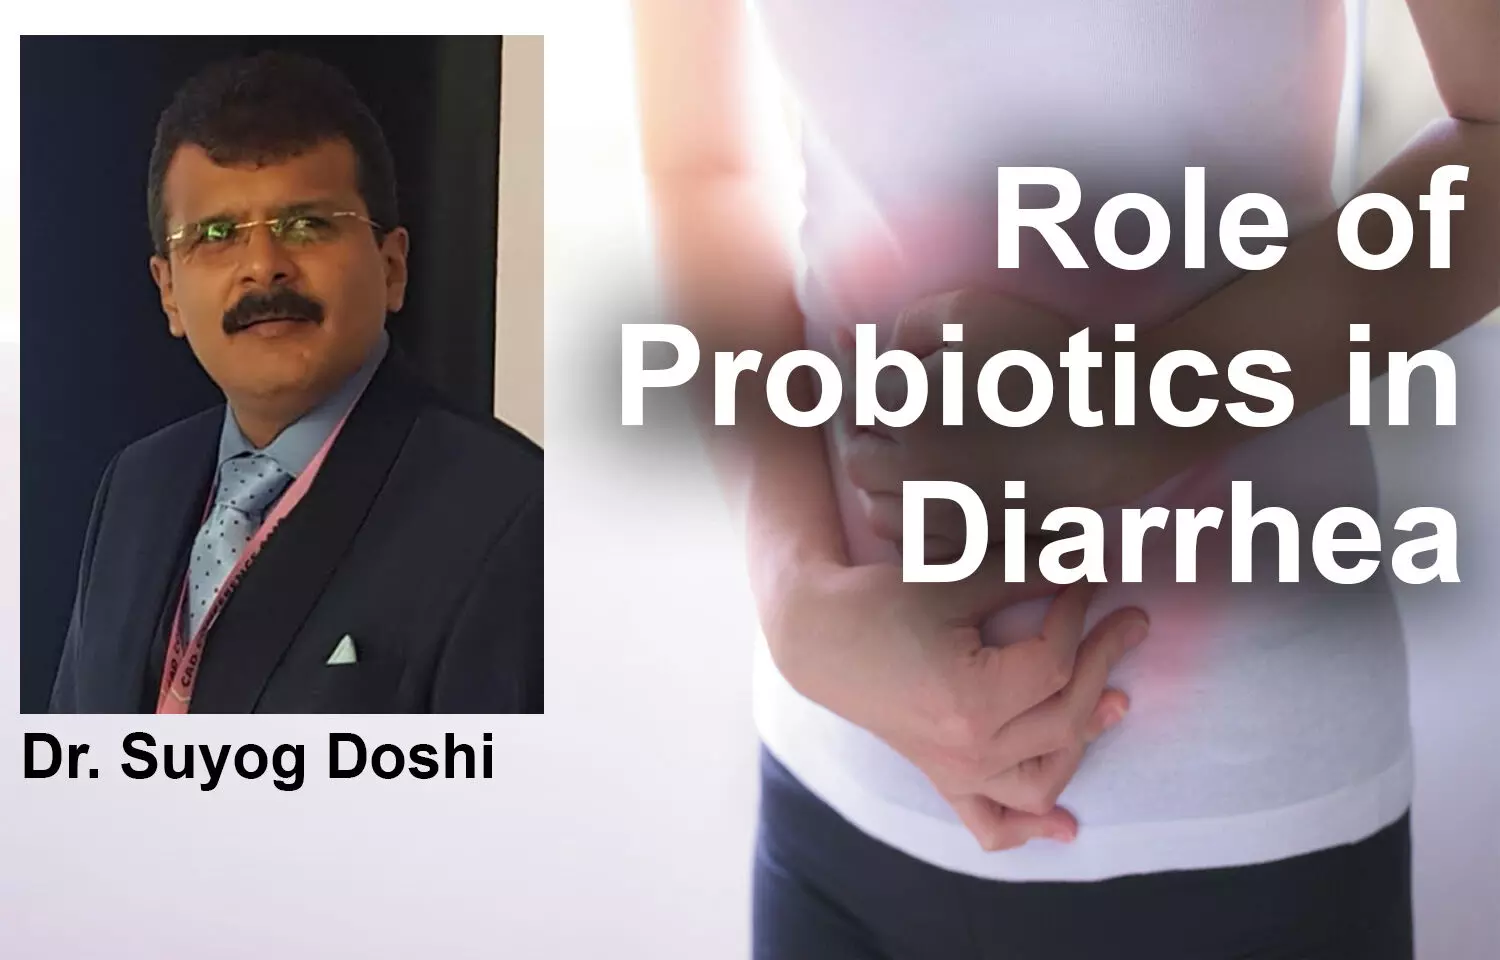 Monsoon Illness Disease- Acute infection Diarrhea and role of probiotics